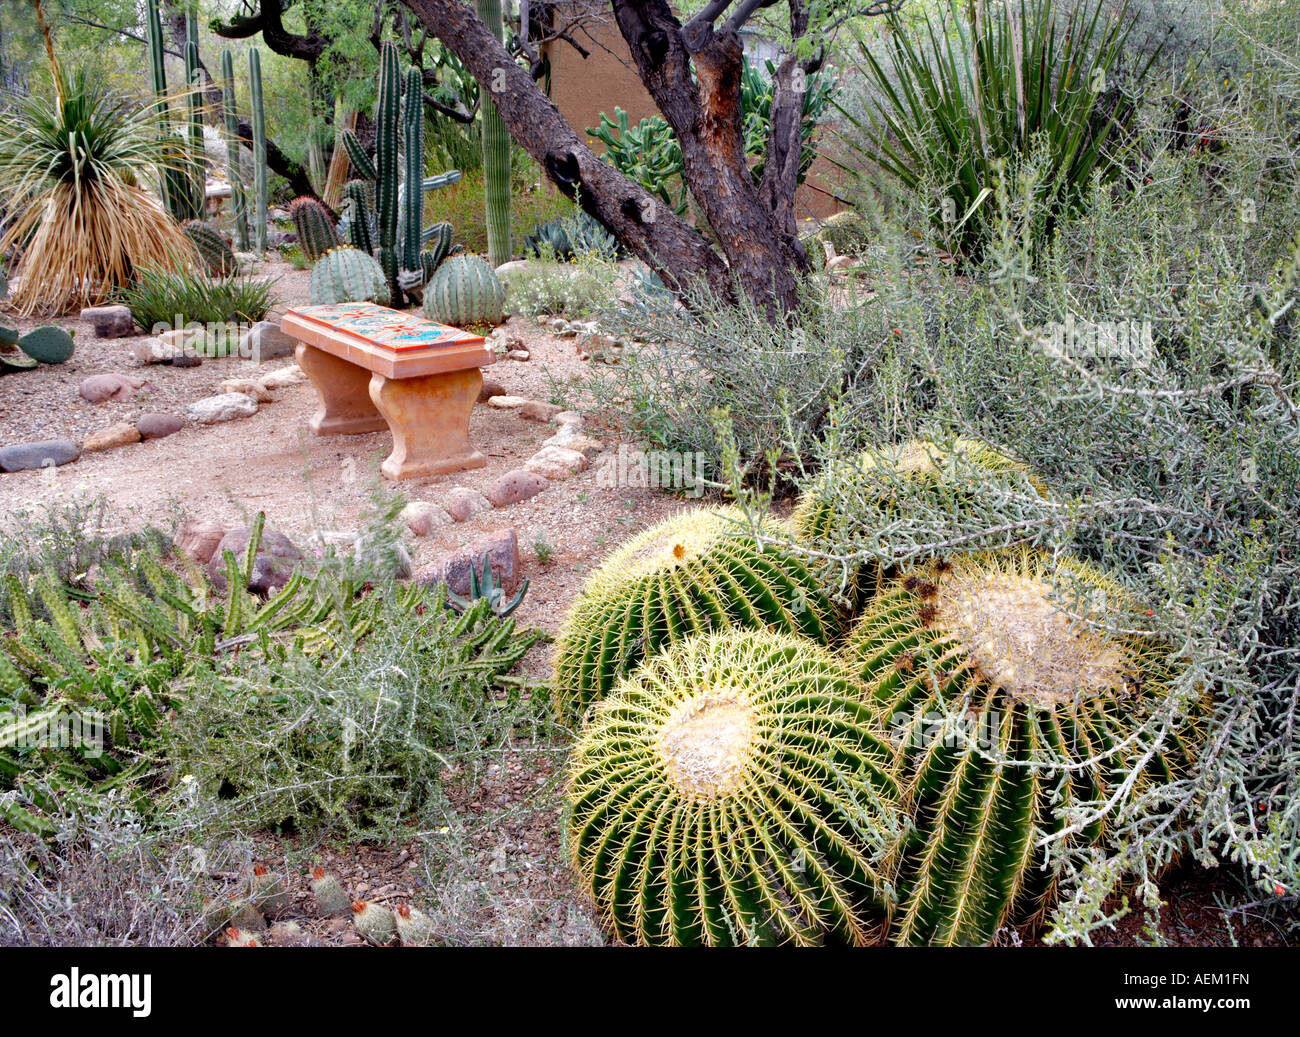 Kakteengarten Mit Sitzbank In Tucson Botanical Gardens Tucson